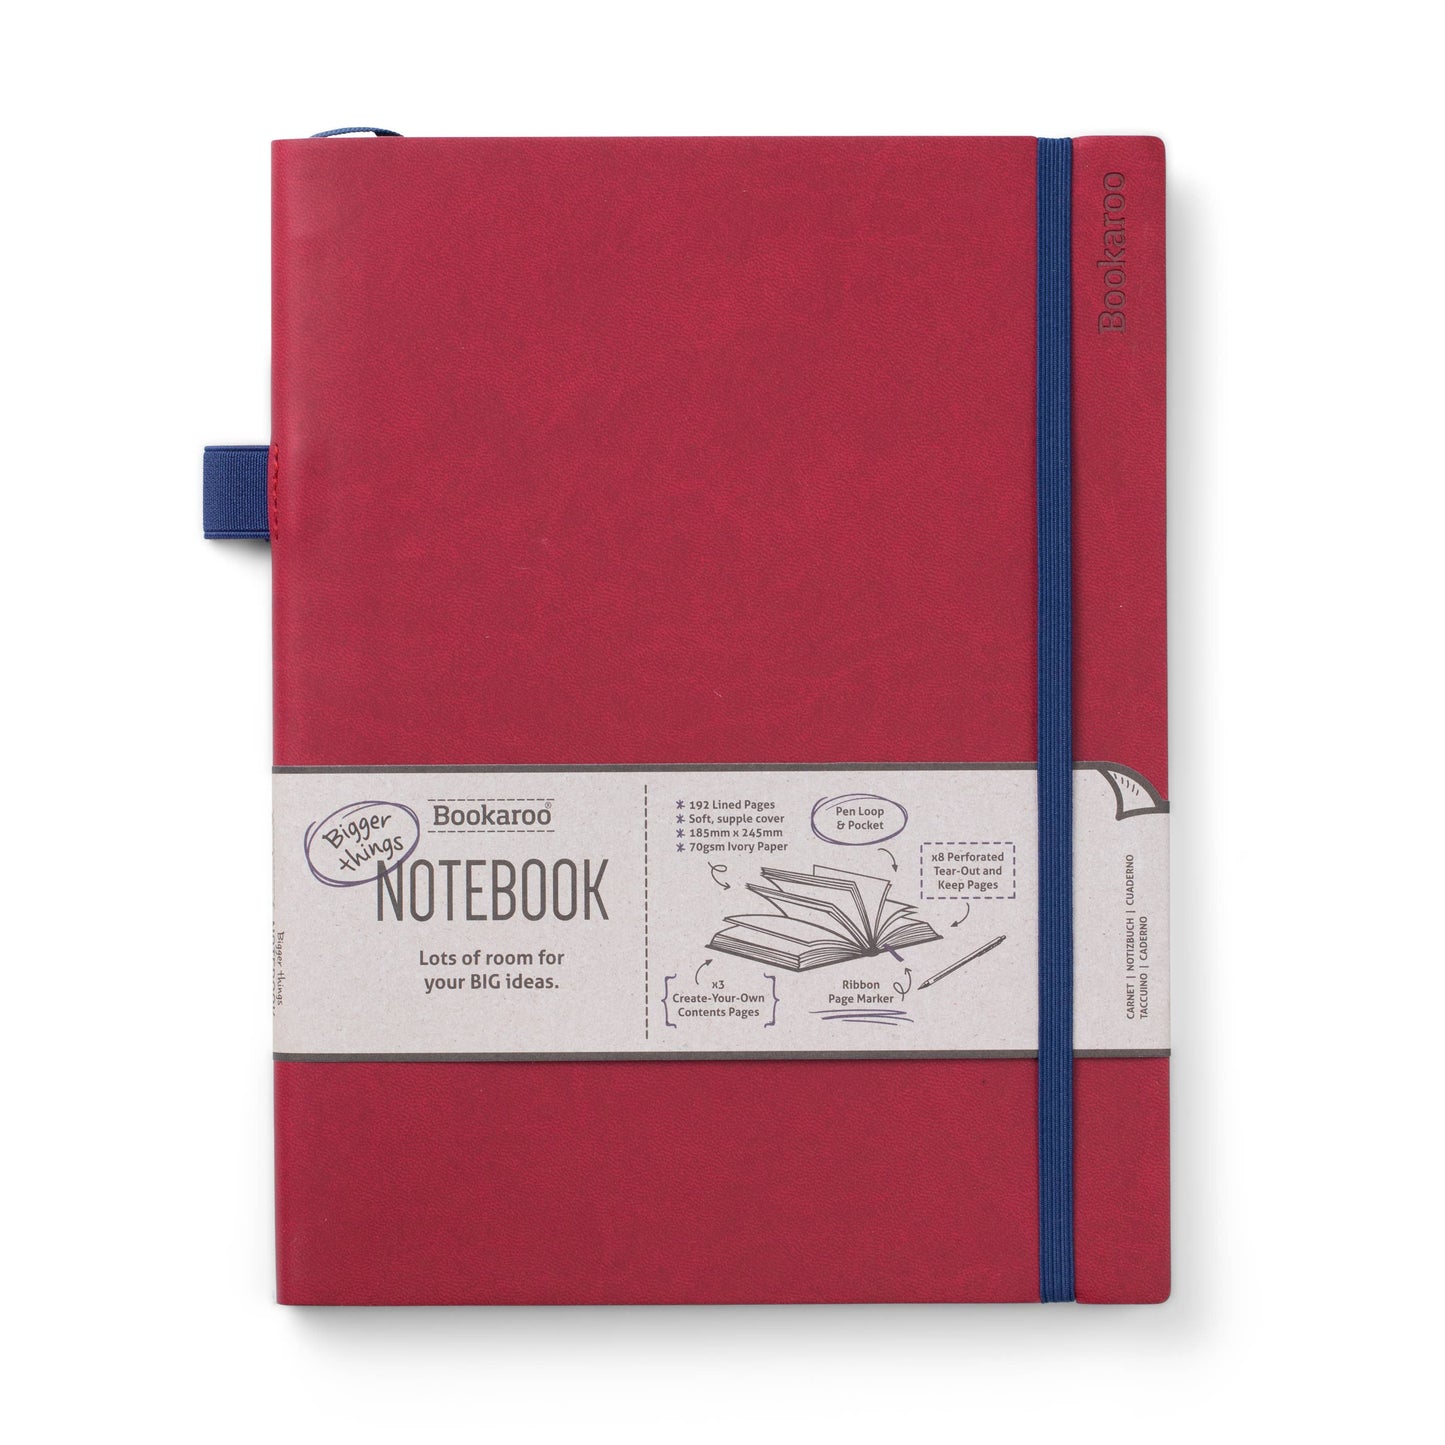 Bookaroo Bigger Things Notebook: Navy